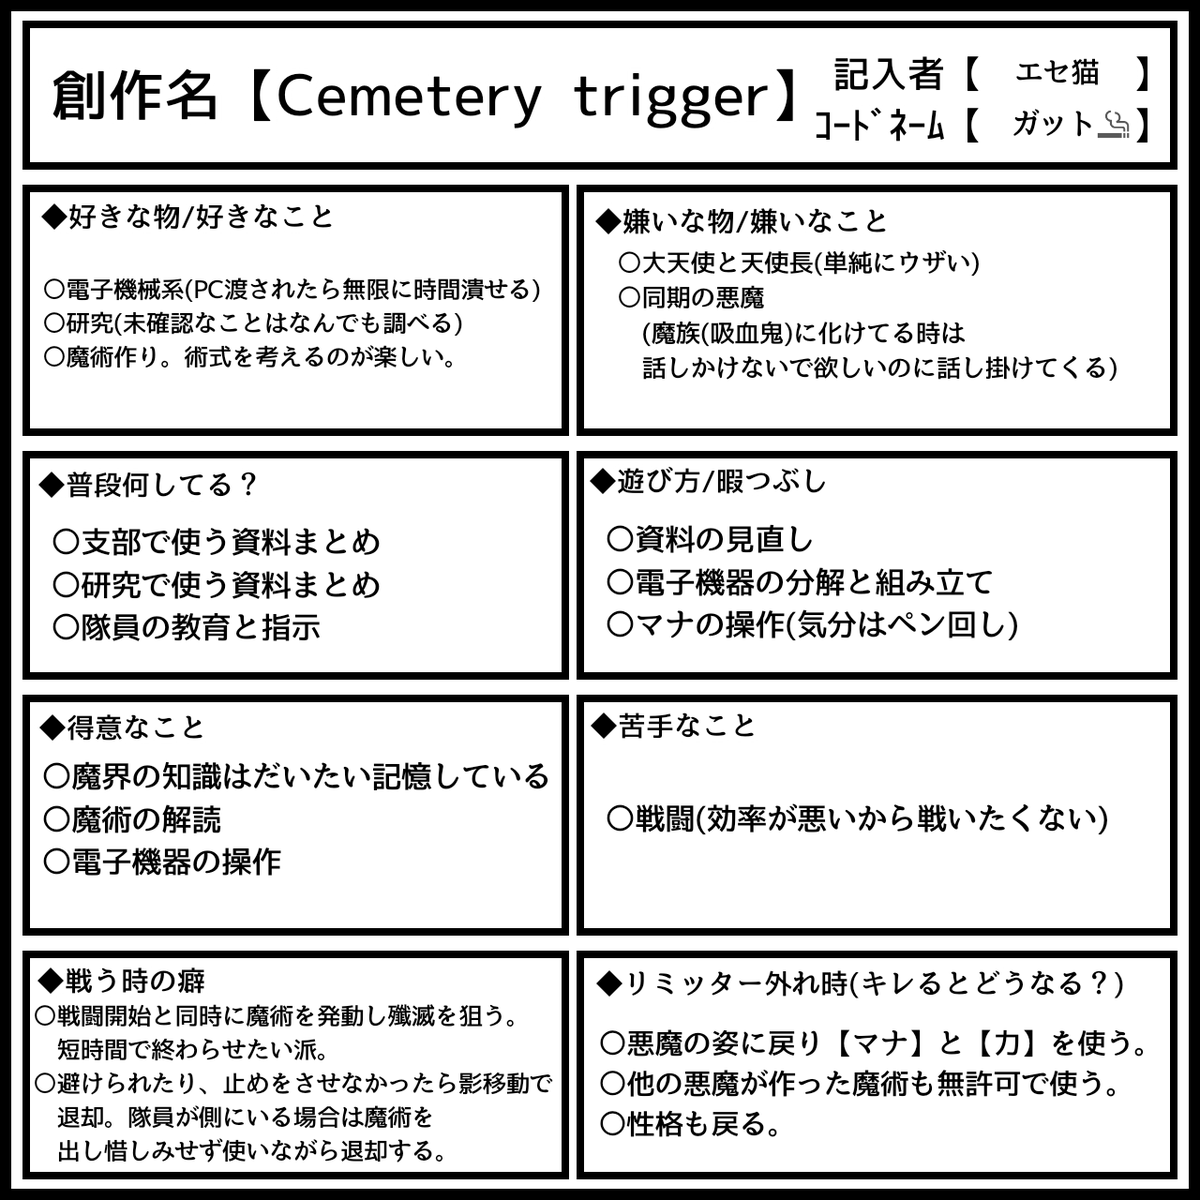 #Cemetery_trigger_ガット
#Cemetery_trigger_資料_キャラ設定
テコ入れ終了。変更あるかも。 https://t.co/dTo6y5l4E4 